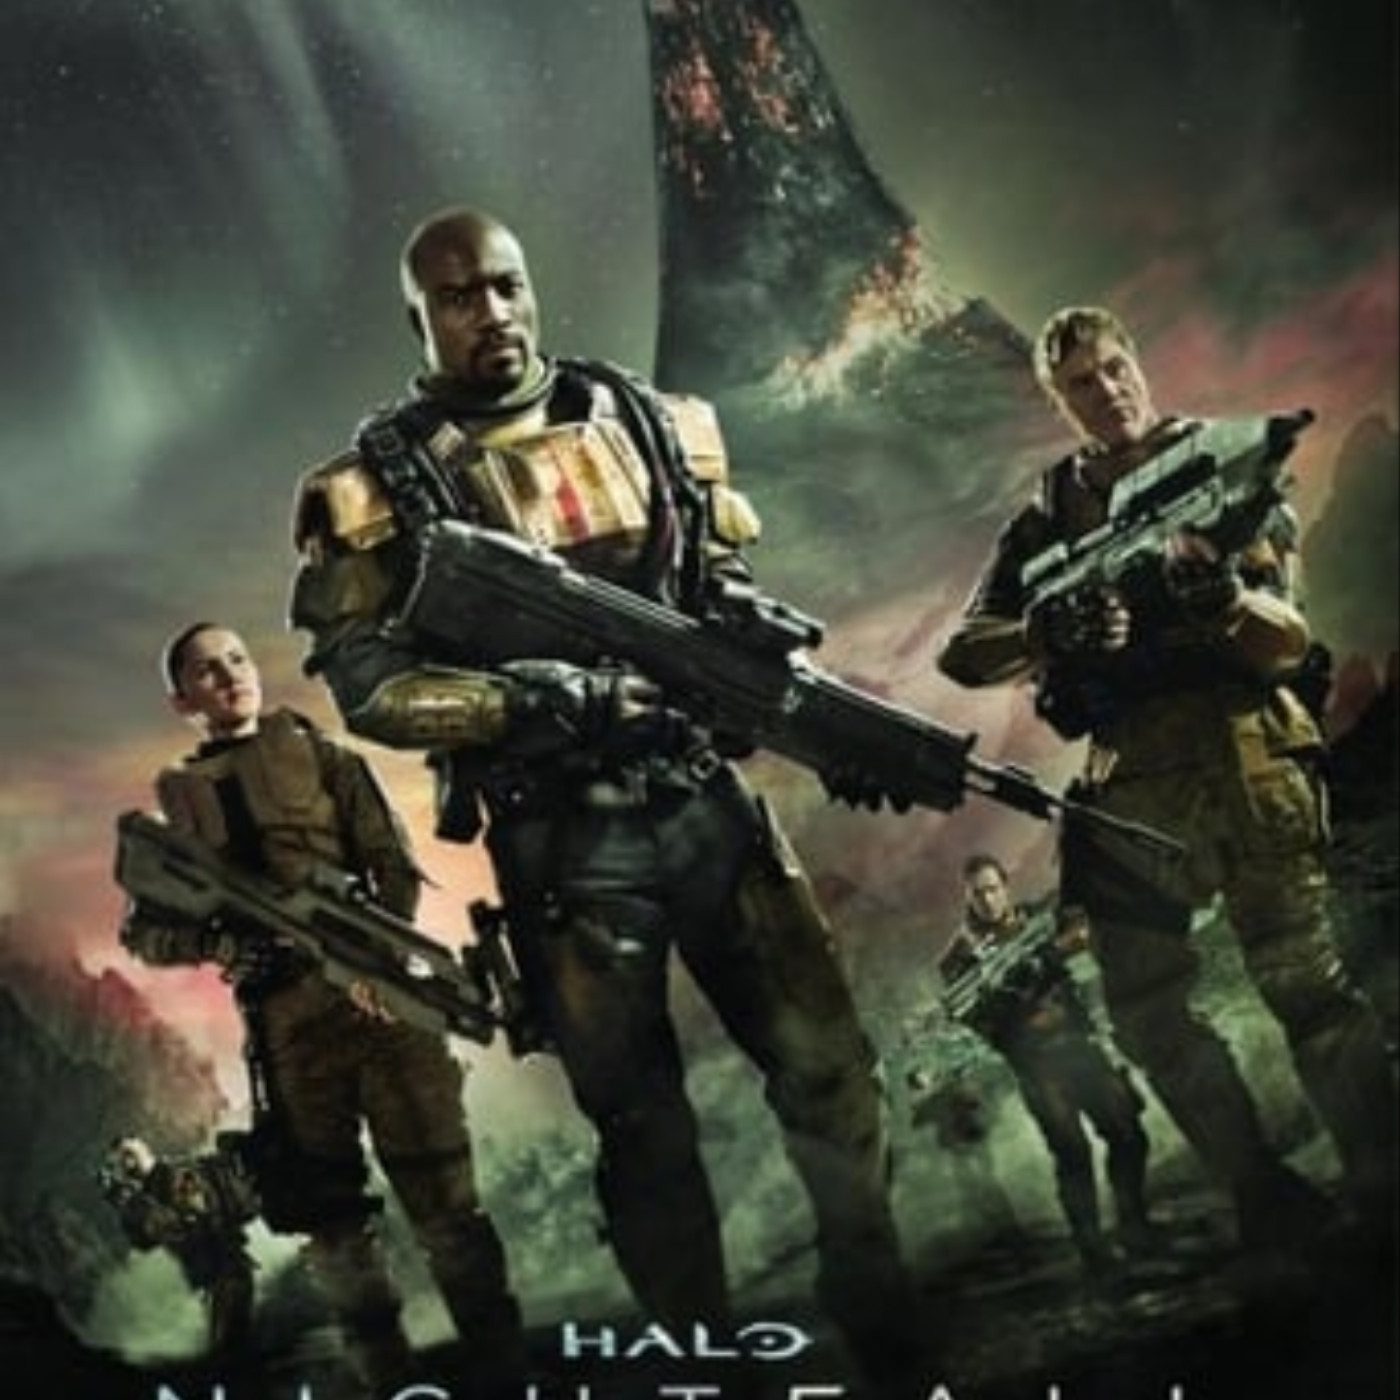 UHDTV] Halo: Nightfall pelicula completa en español gratis Repelisplus |  Podcast on SoundOn